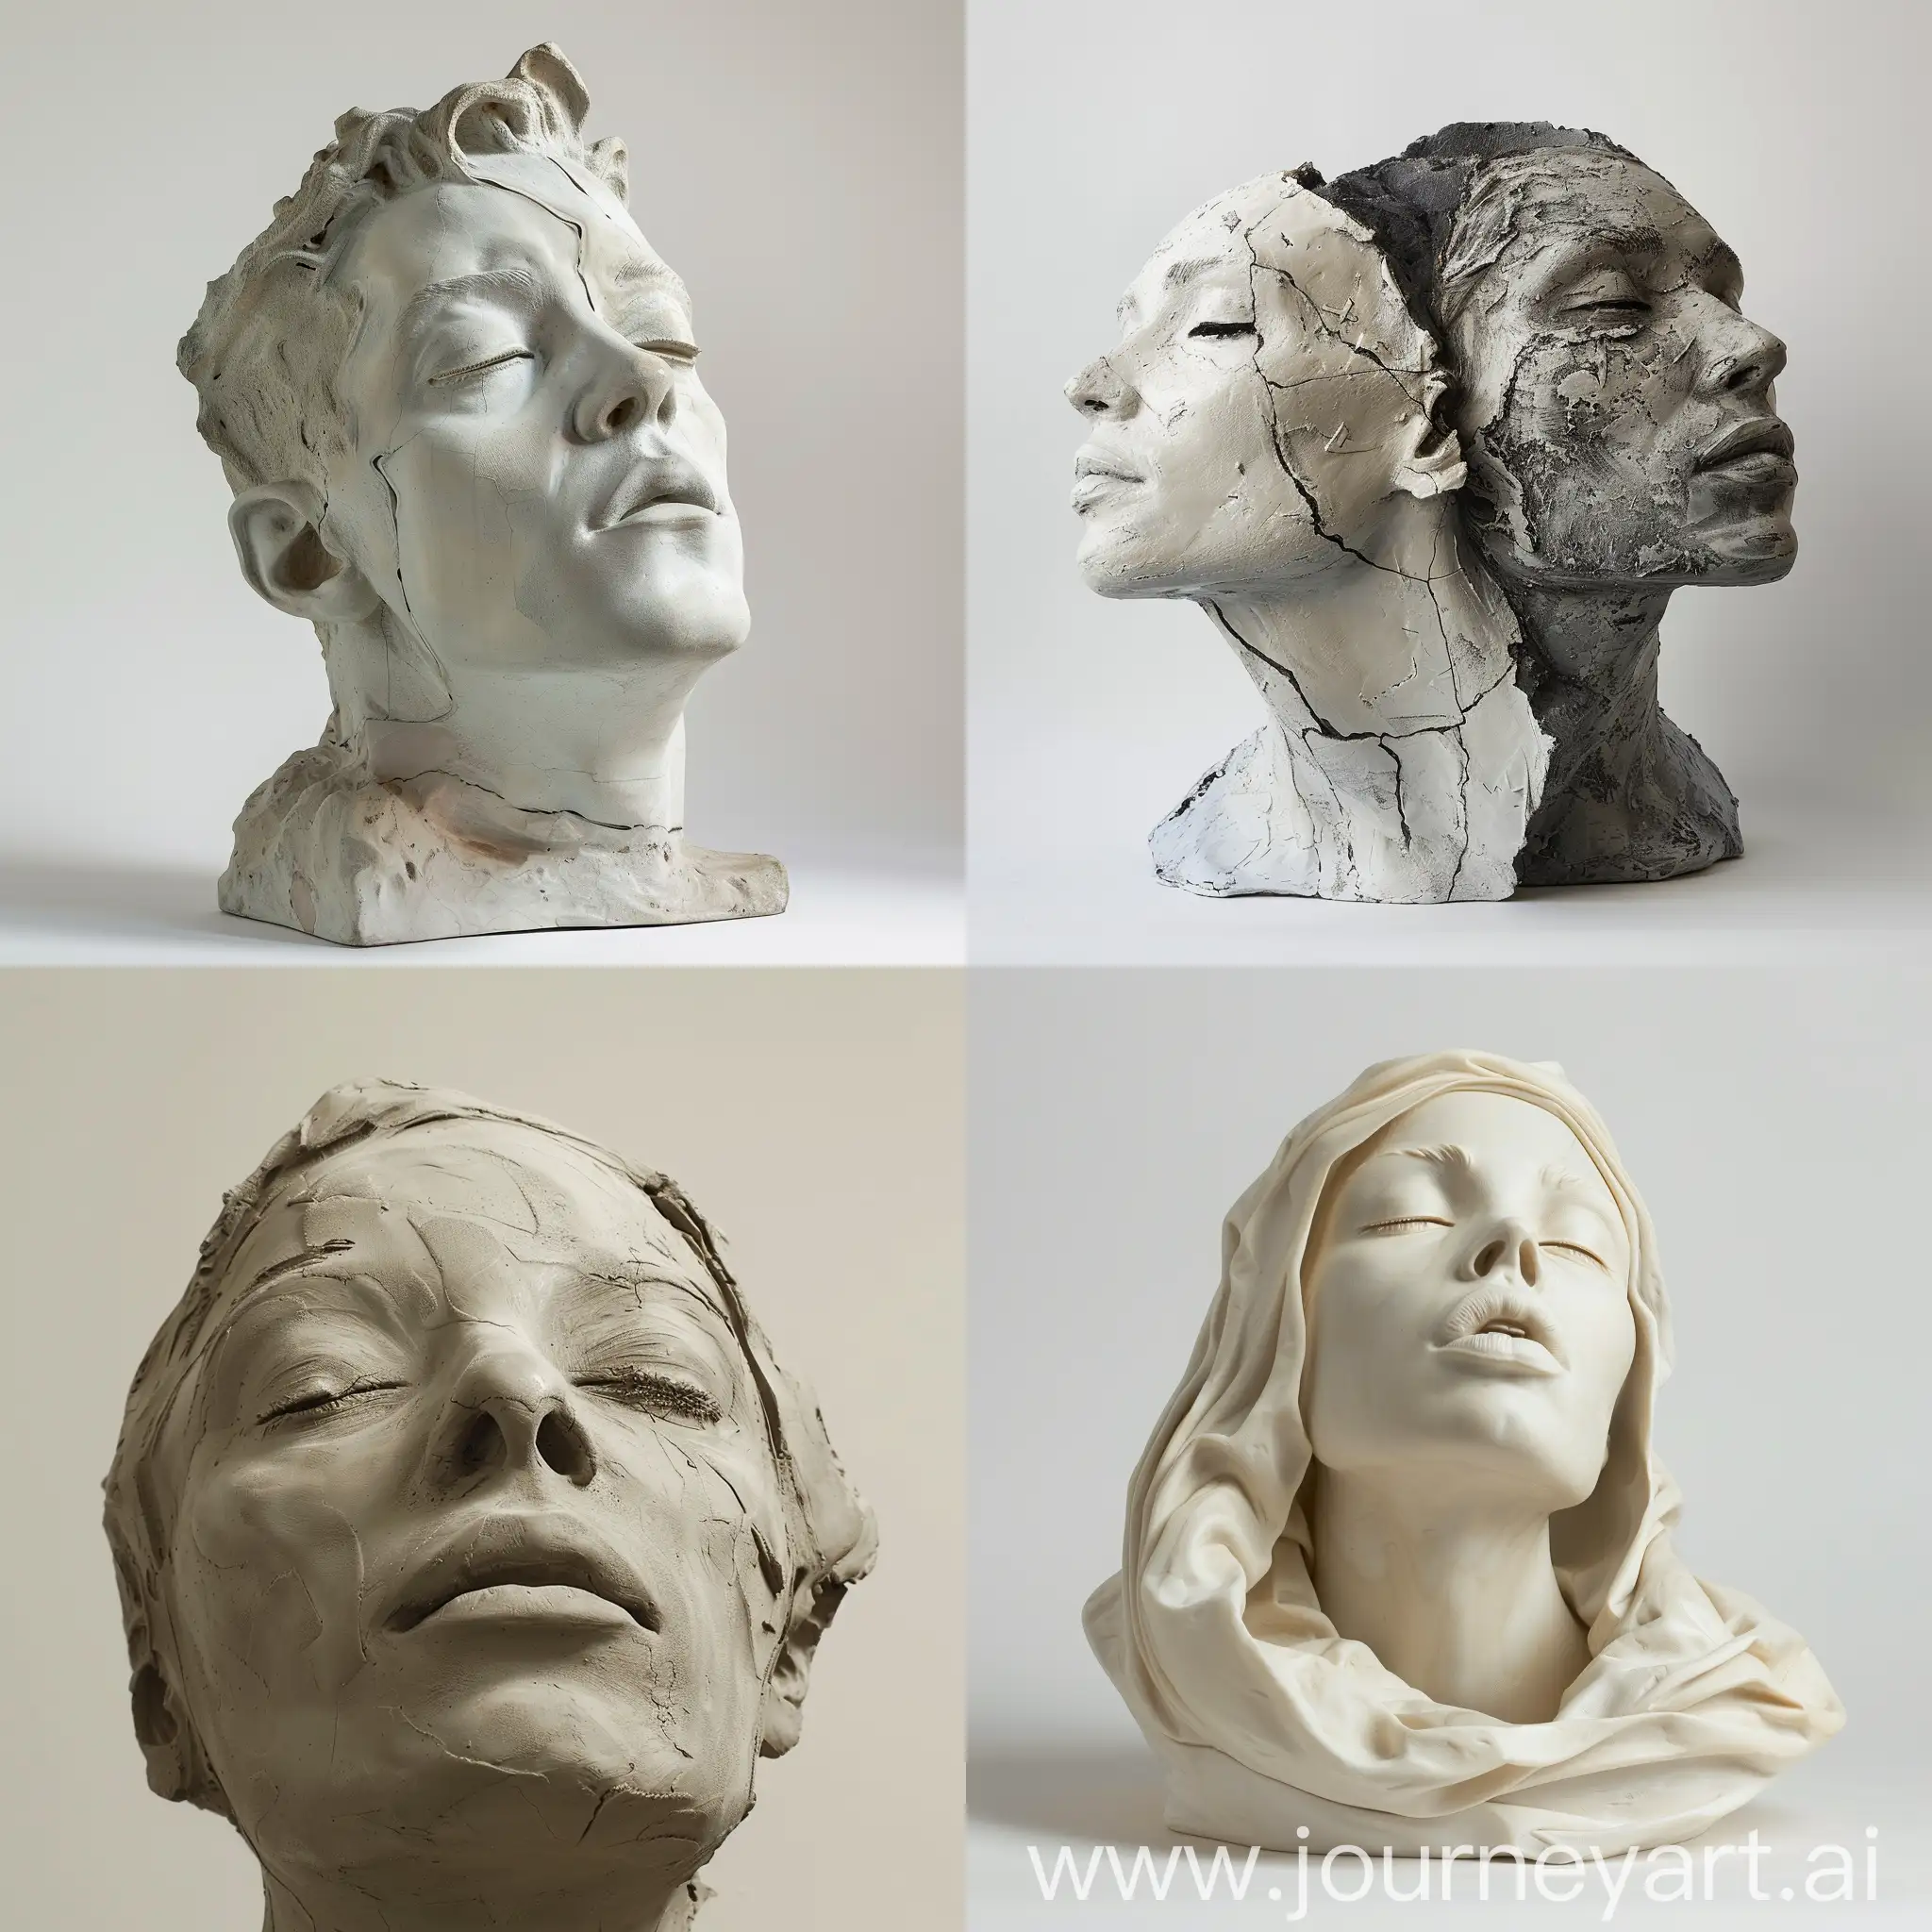 Sculpture portrait by Jean Jullien and Jennifer Rubell 